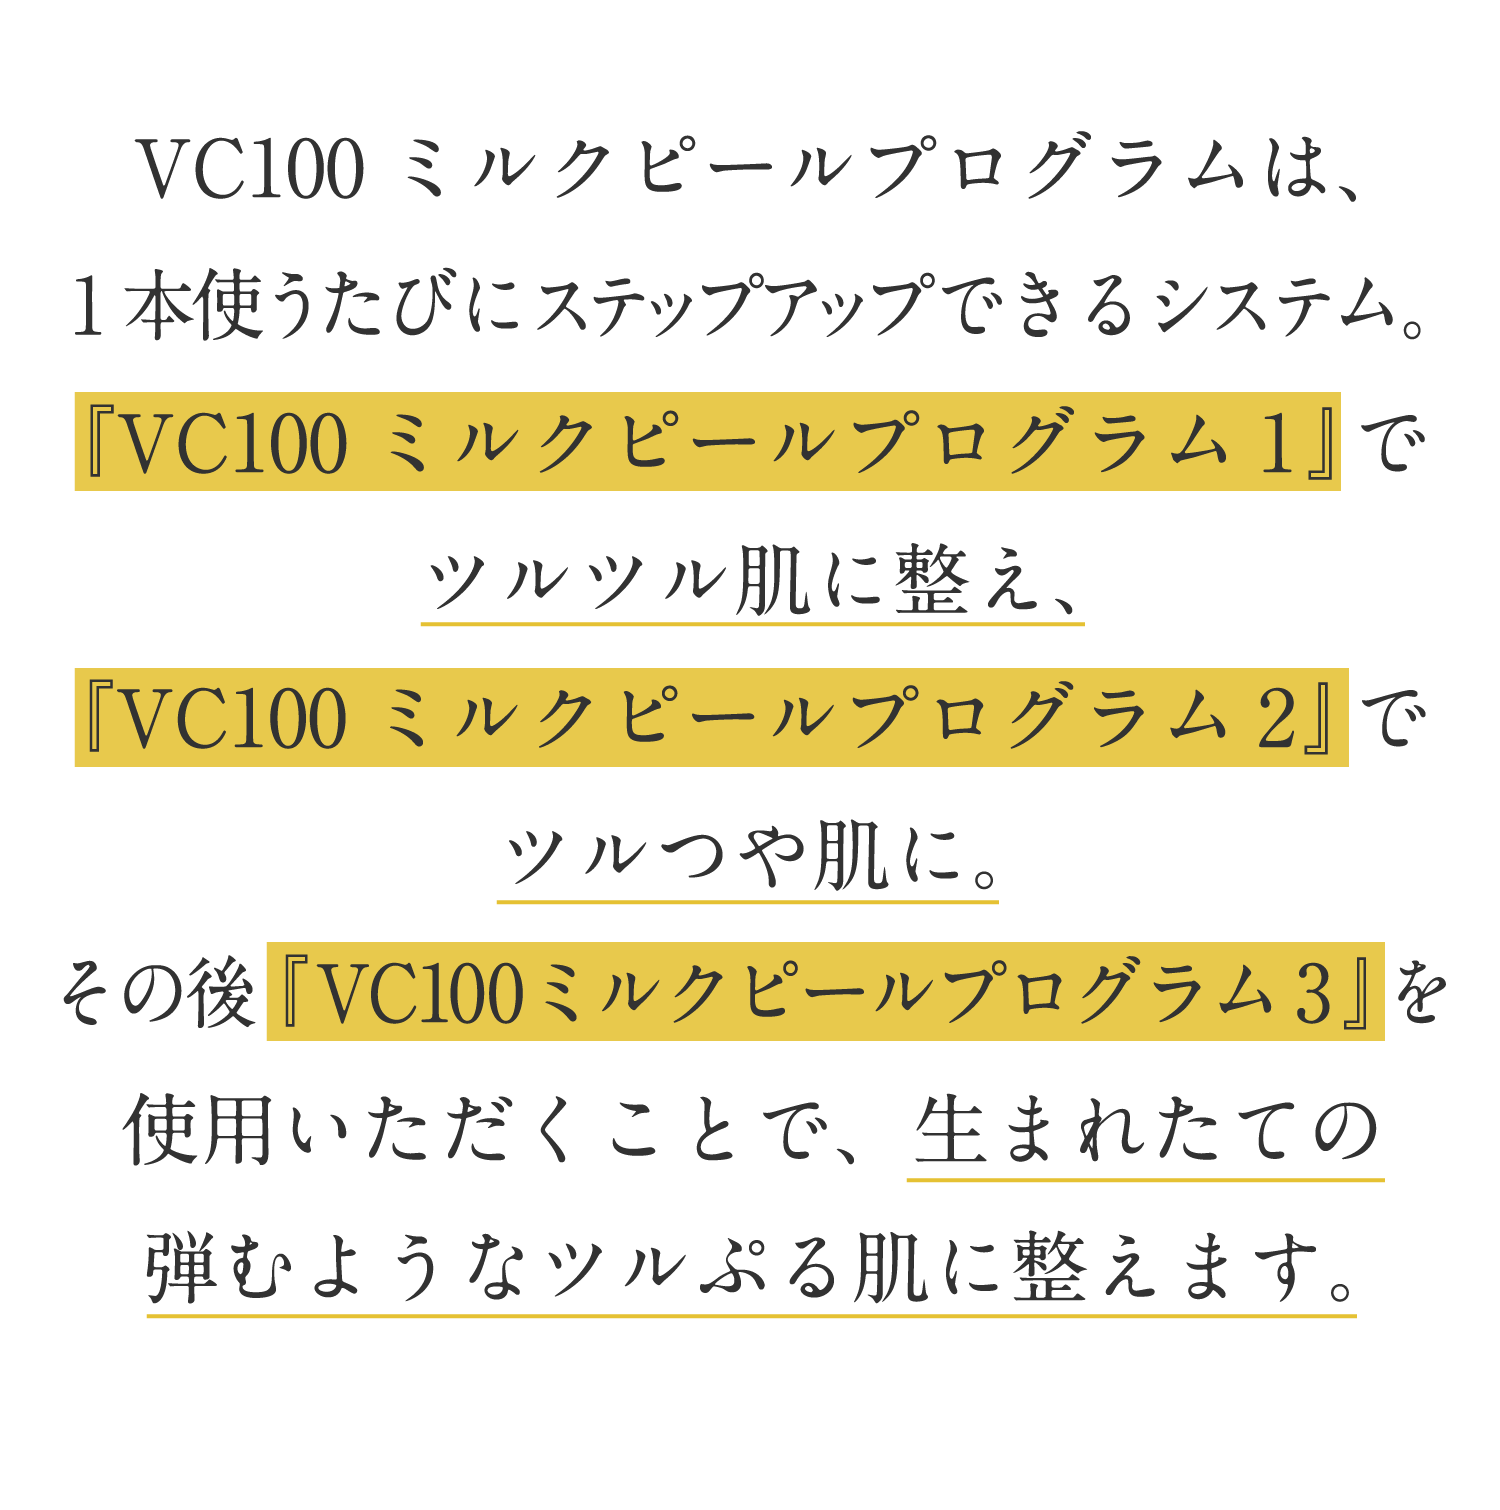 VC100ミルクピールプログラムは、1本使う度にステップアップできるシステム。